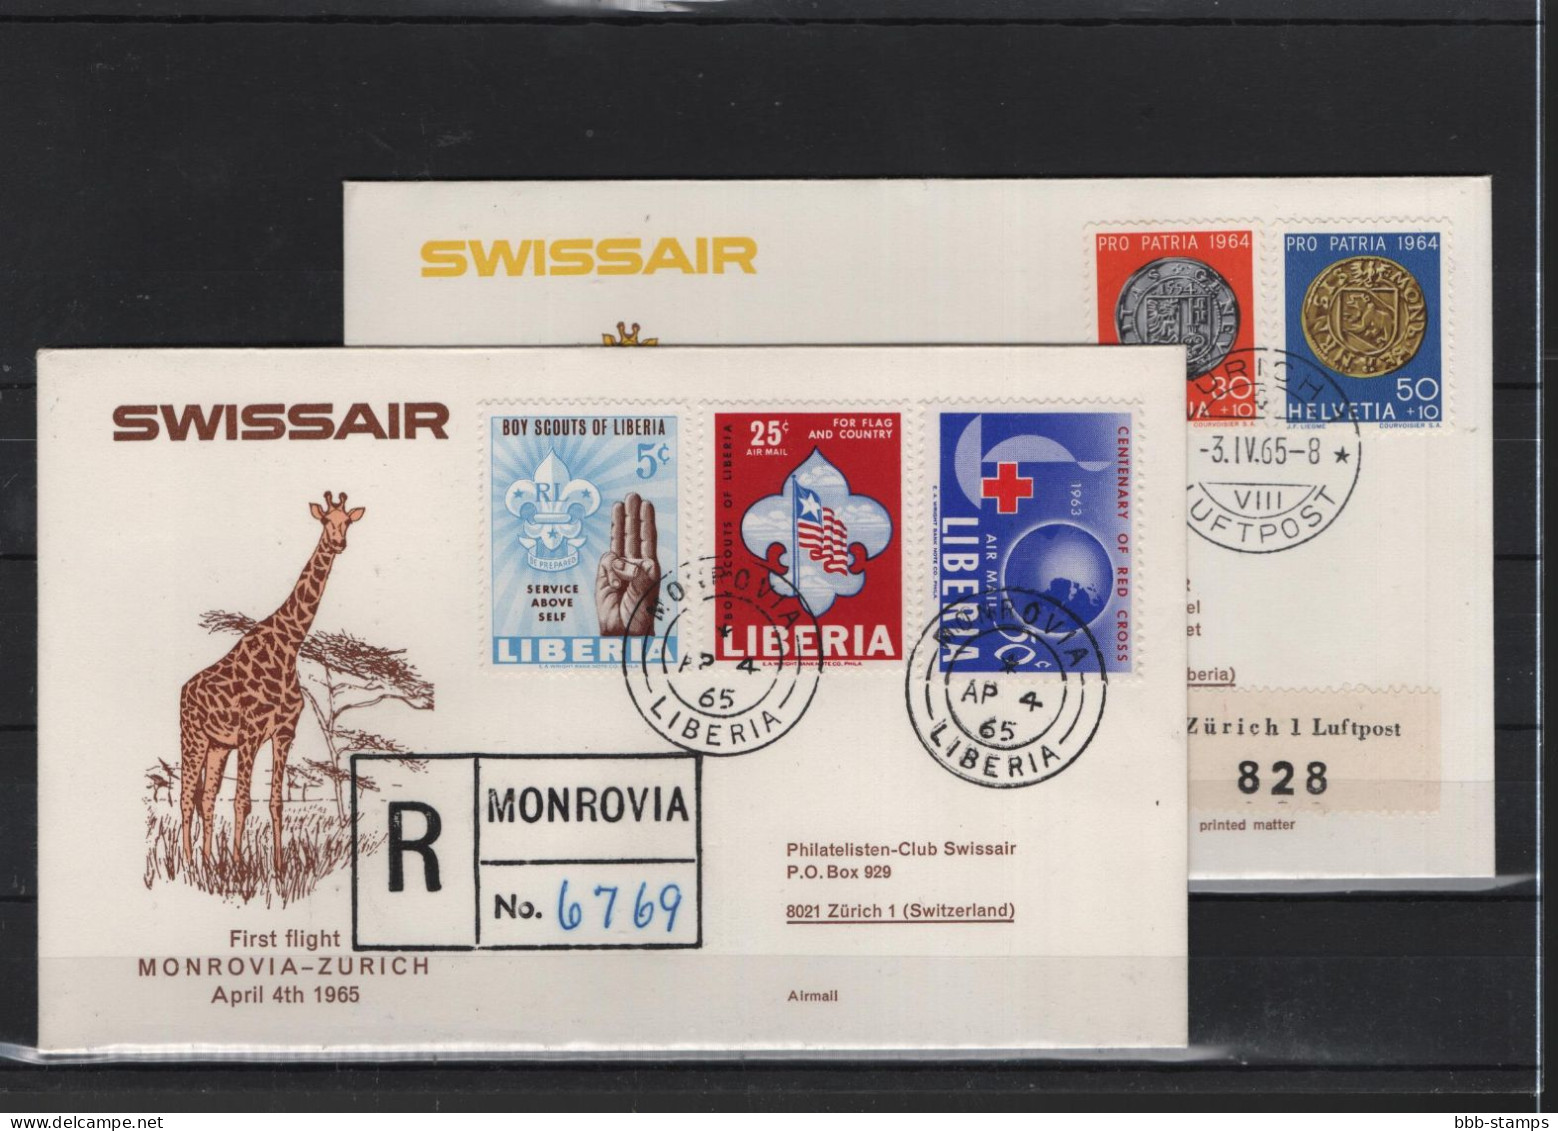 Schweiz Air Mail Swissair  FFC  3.4.1965 Zürich - Genf- Monrovia Vv - First Flight Covers